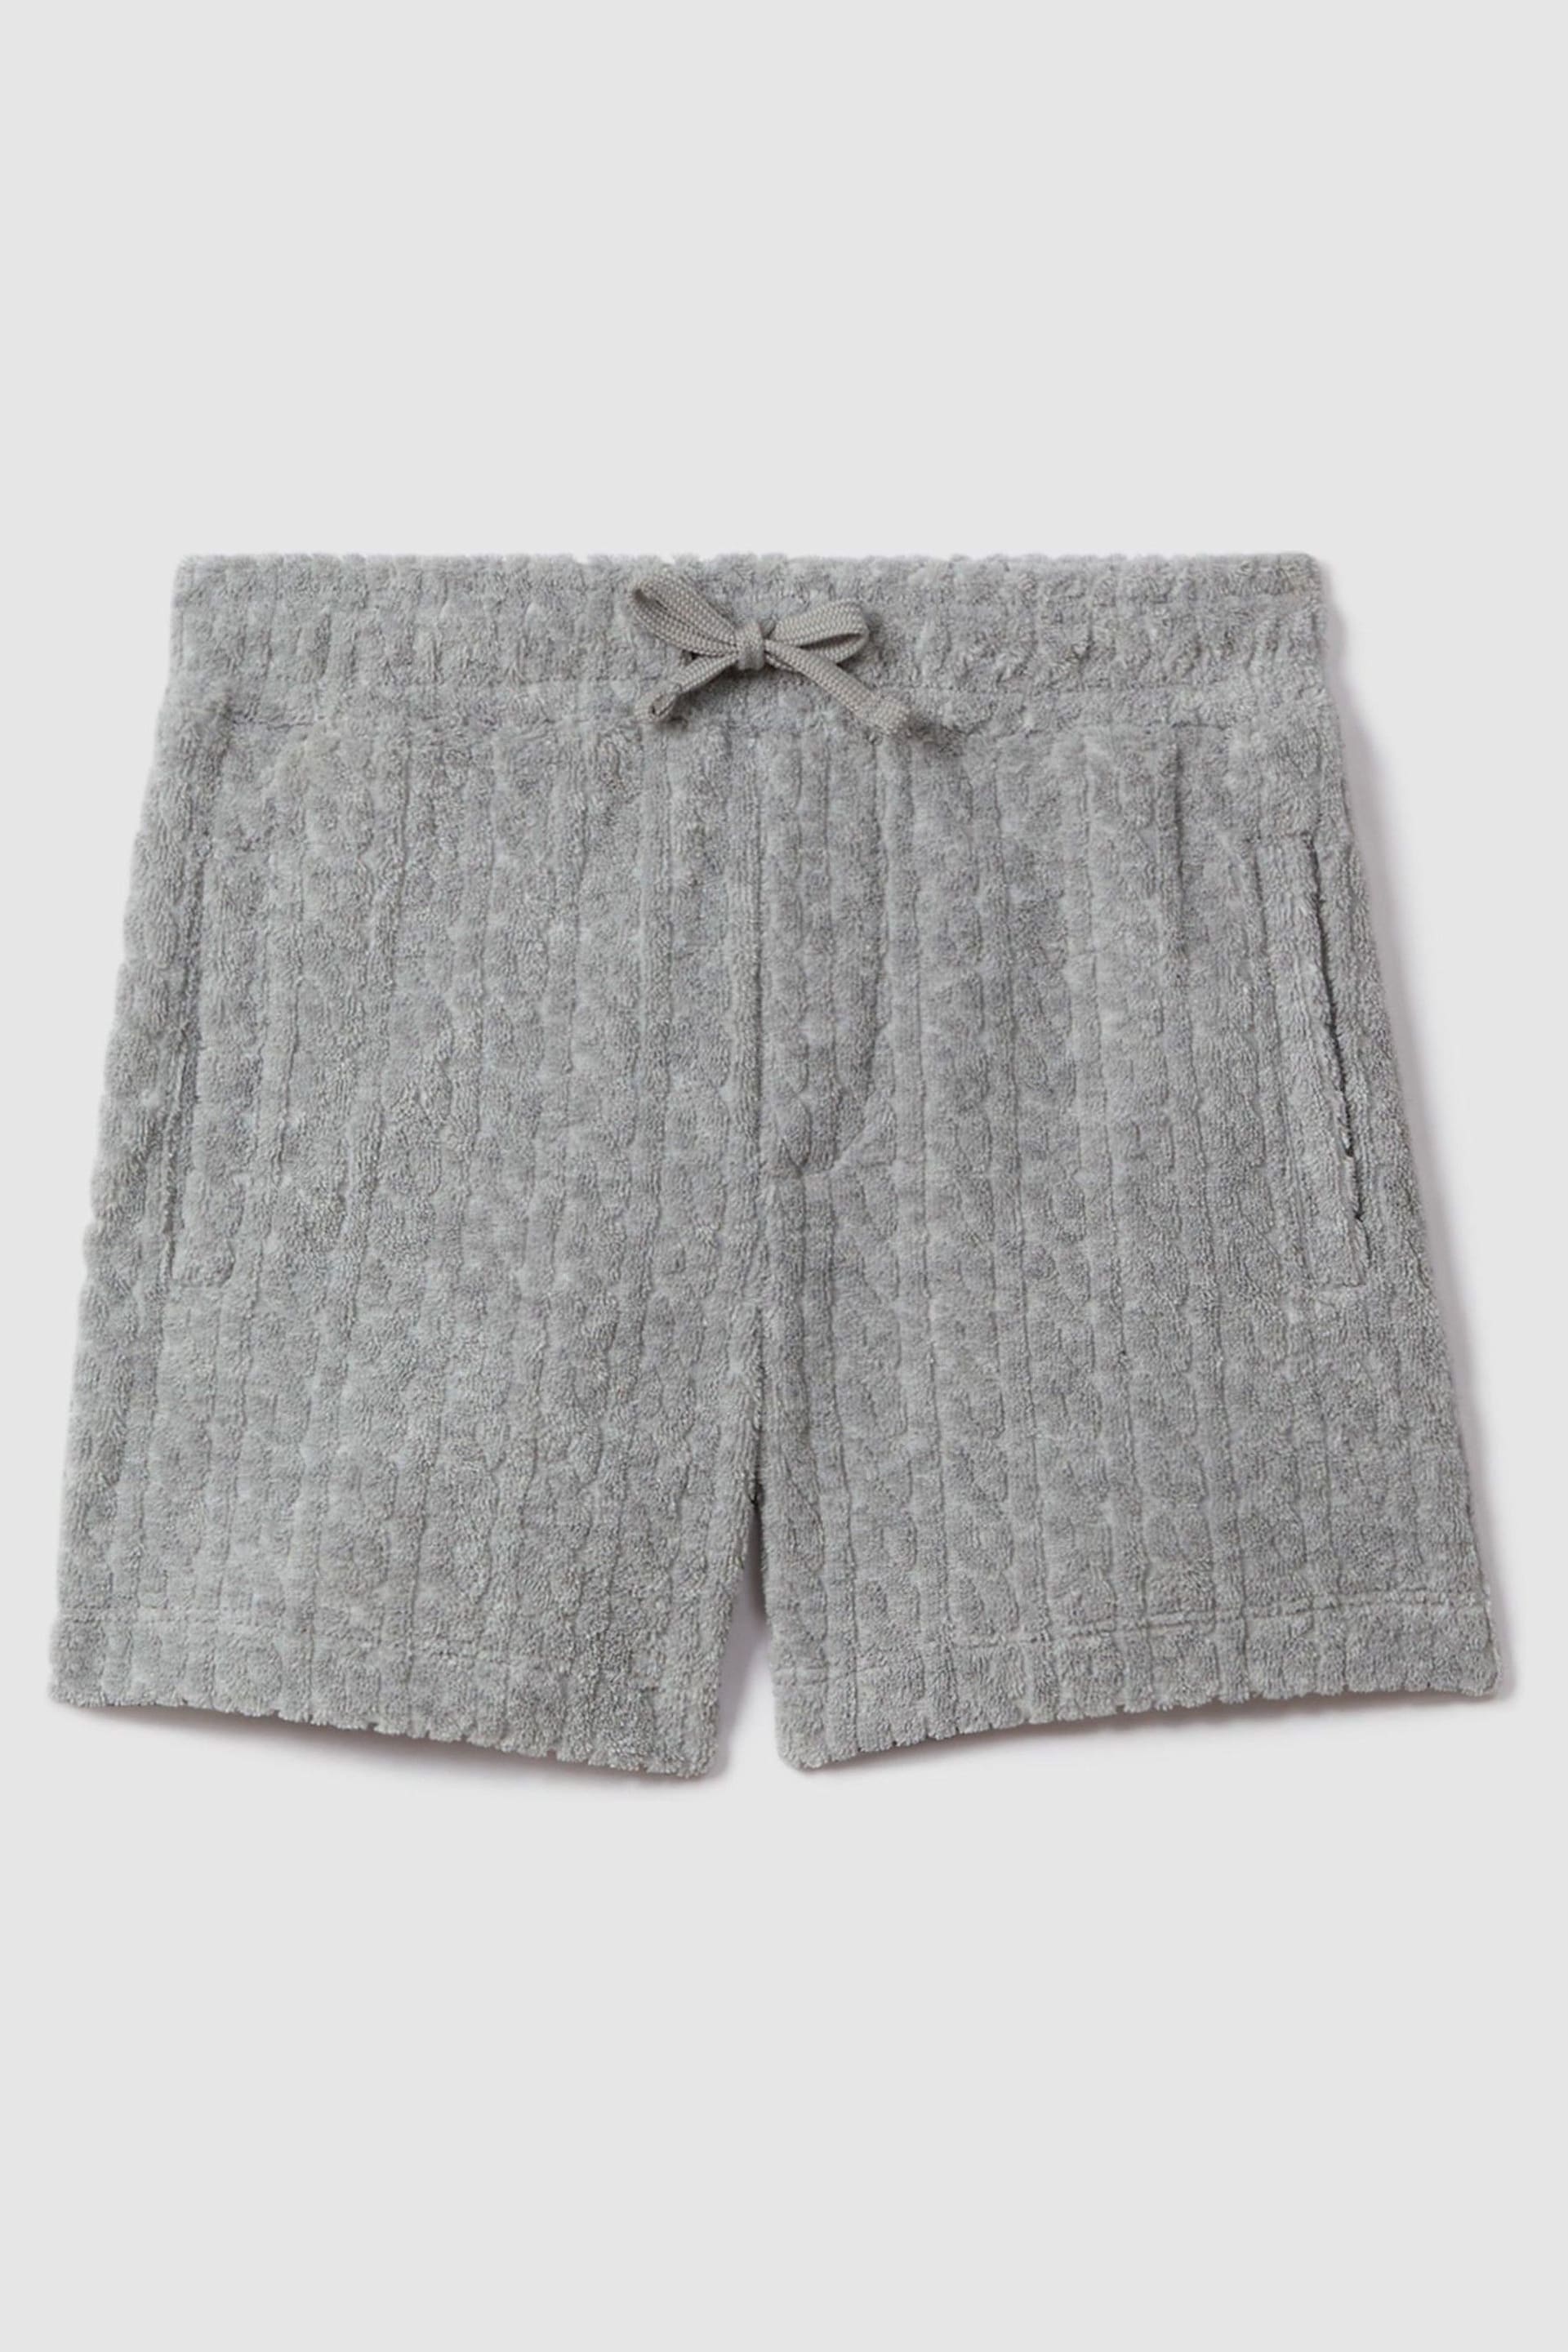 Reiss Soft Grey Fletcher Teen Towelling Drawstring Shorts - Image 1 of 4